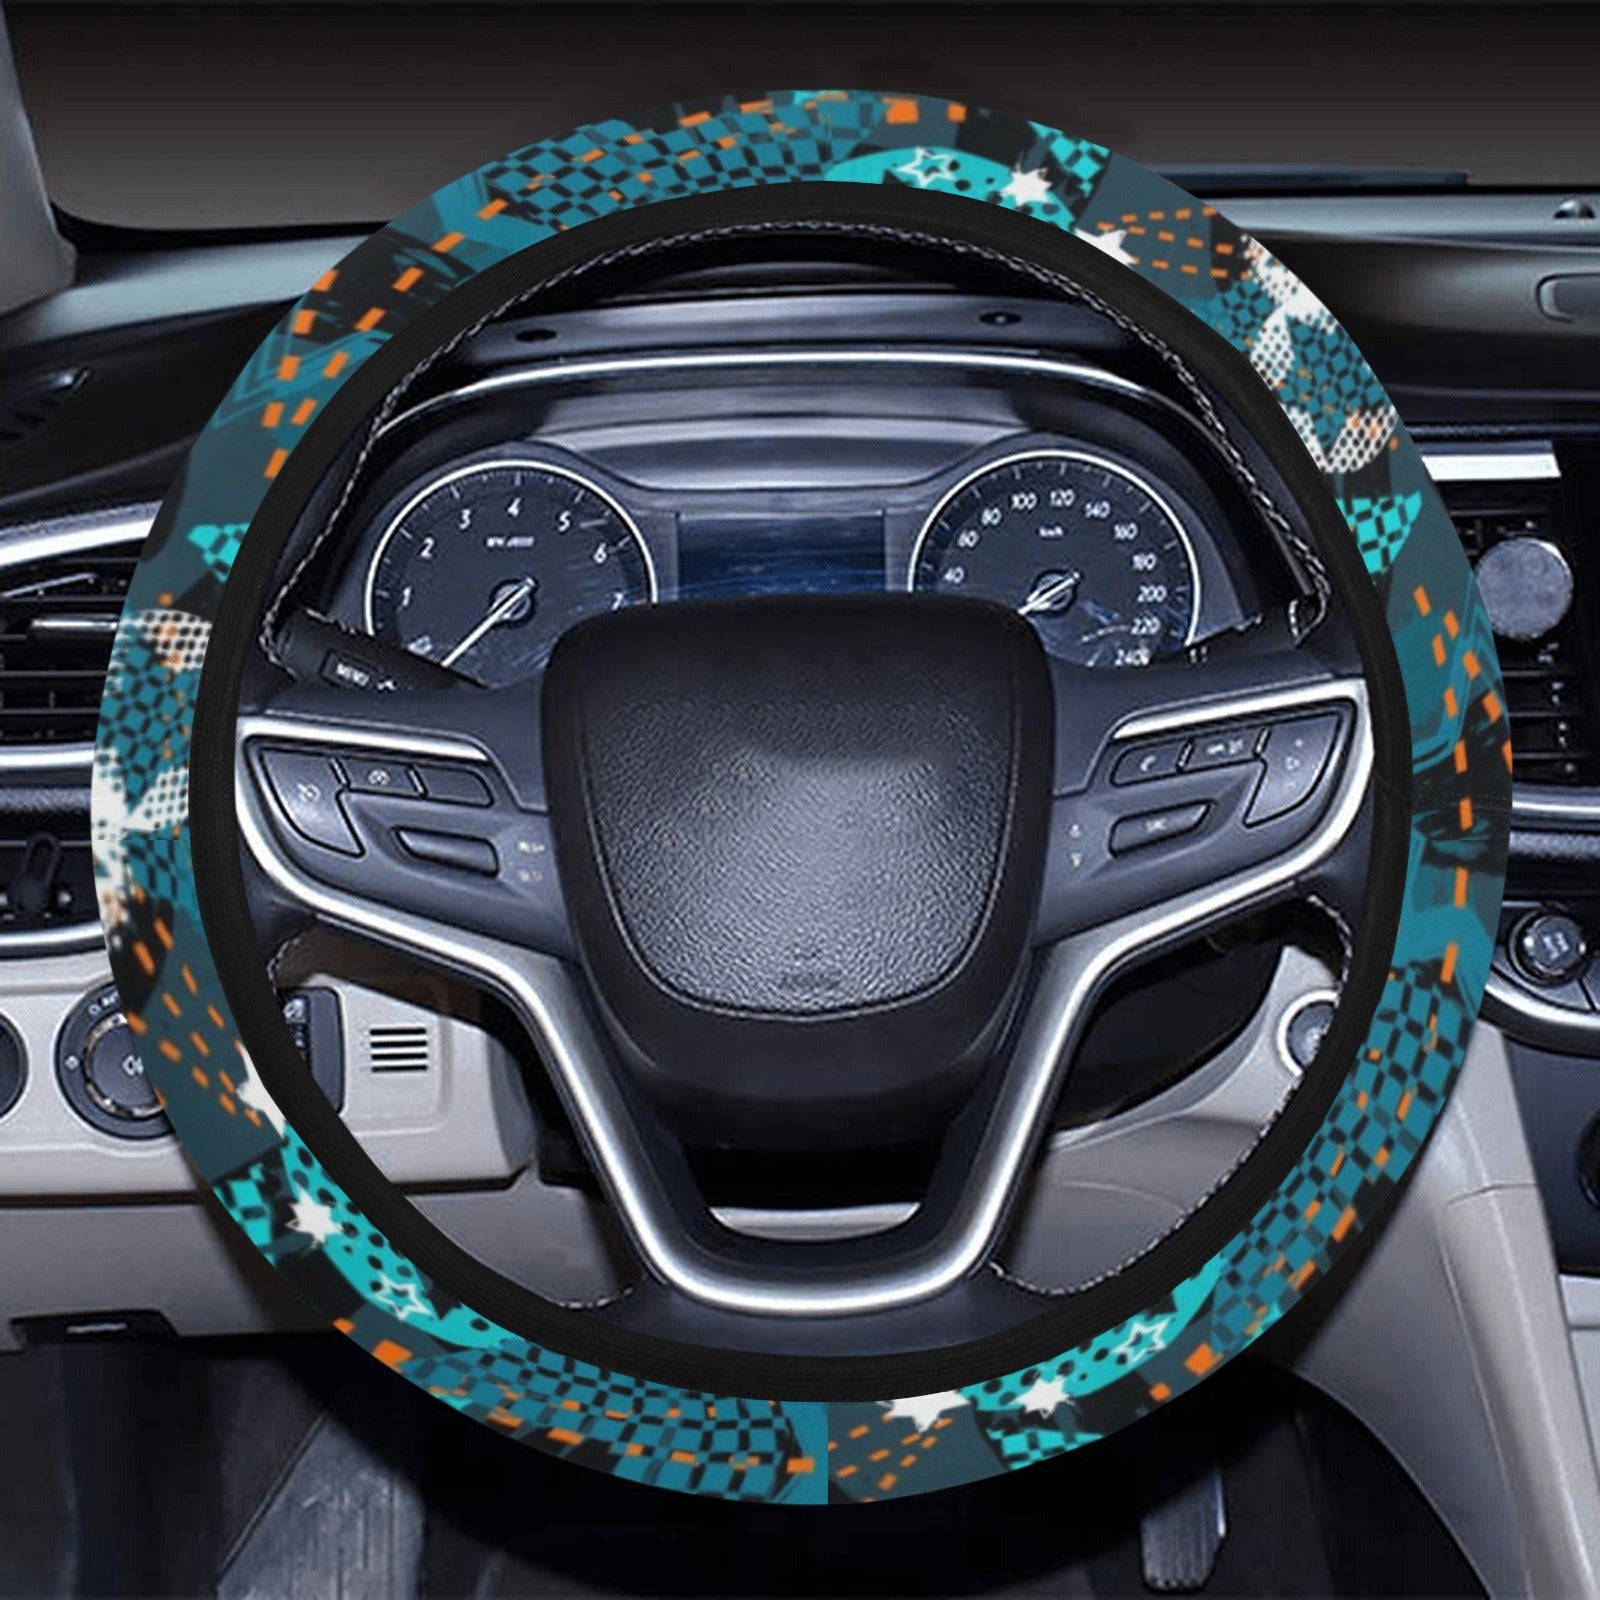 Stars Steering Wheel Cover